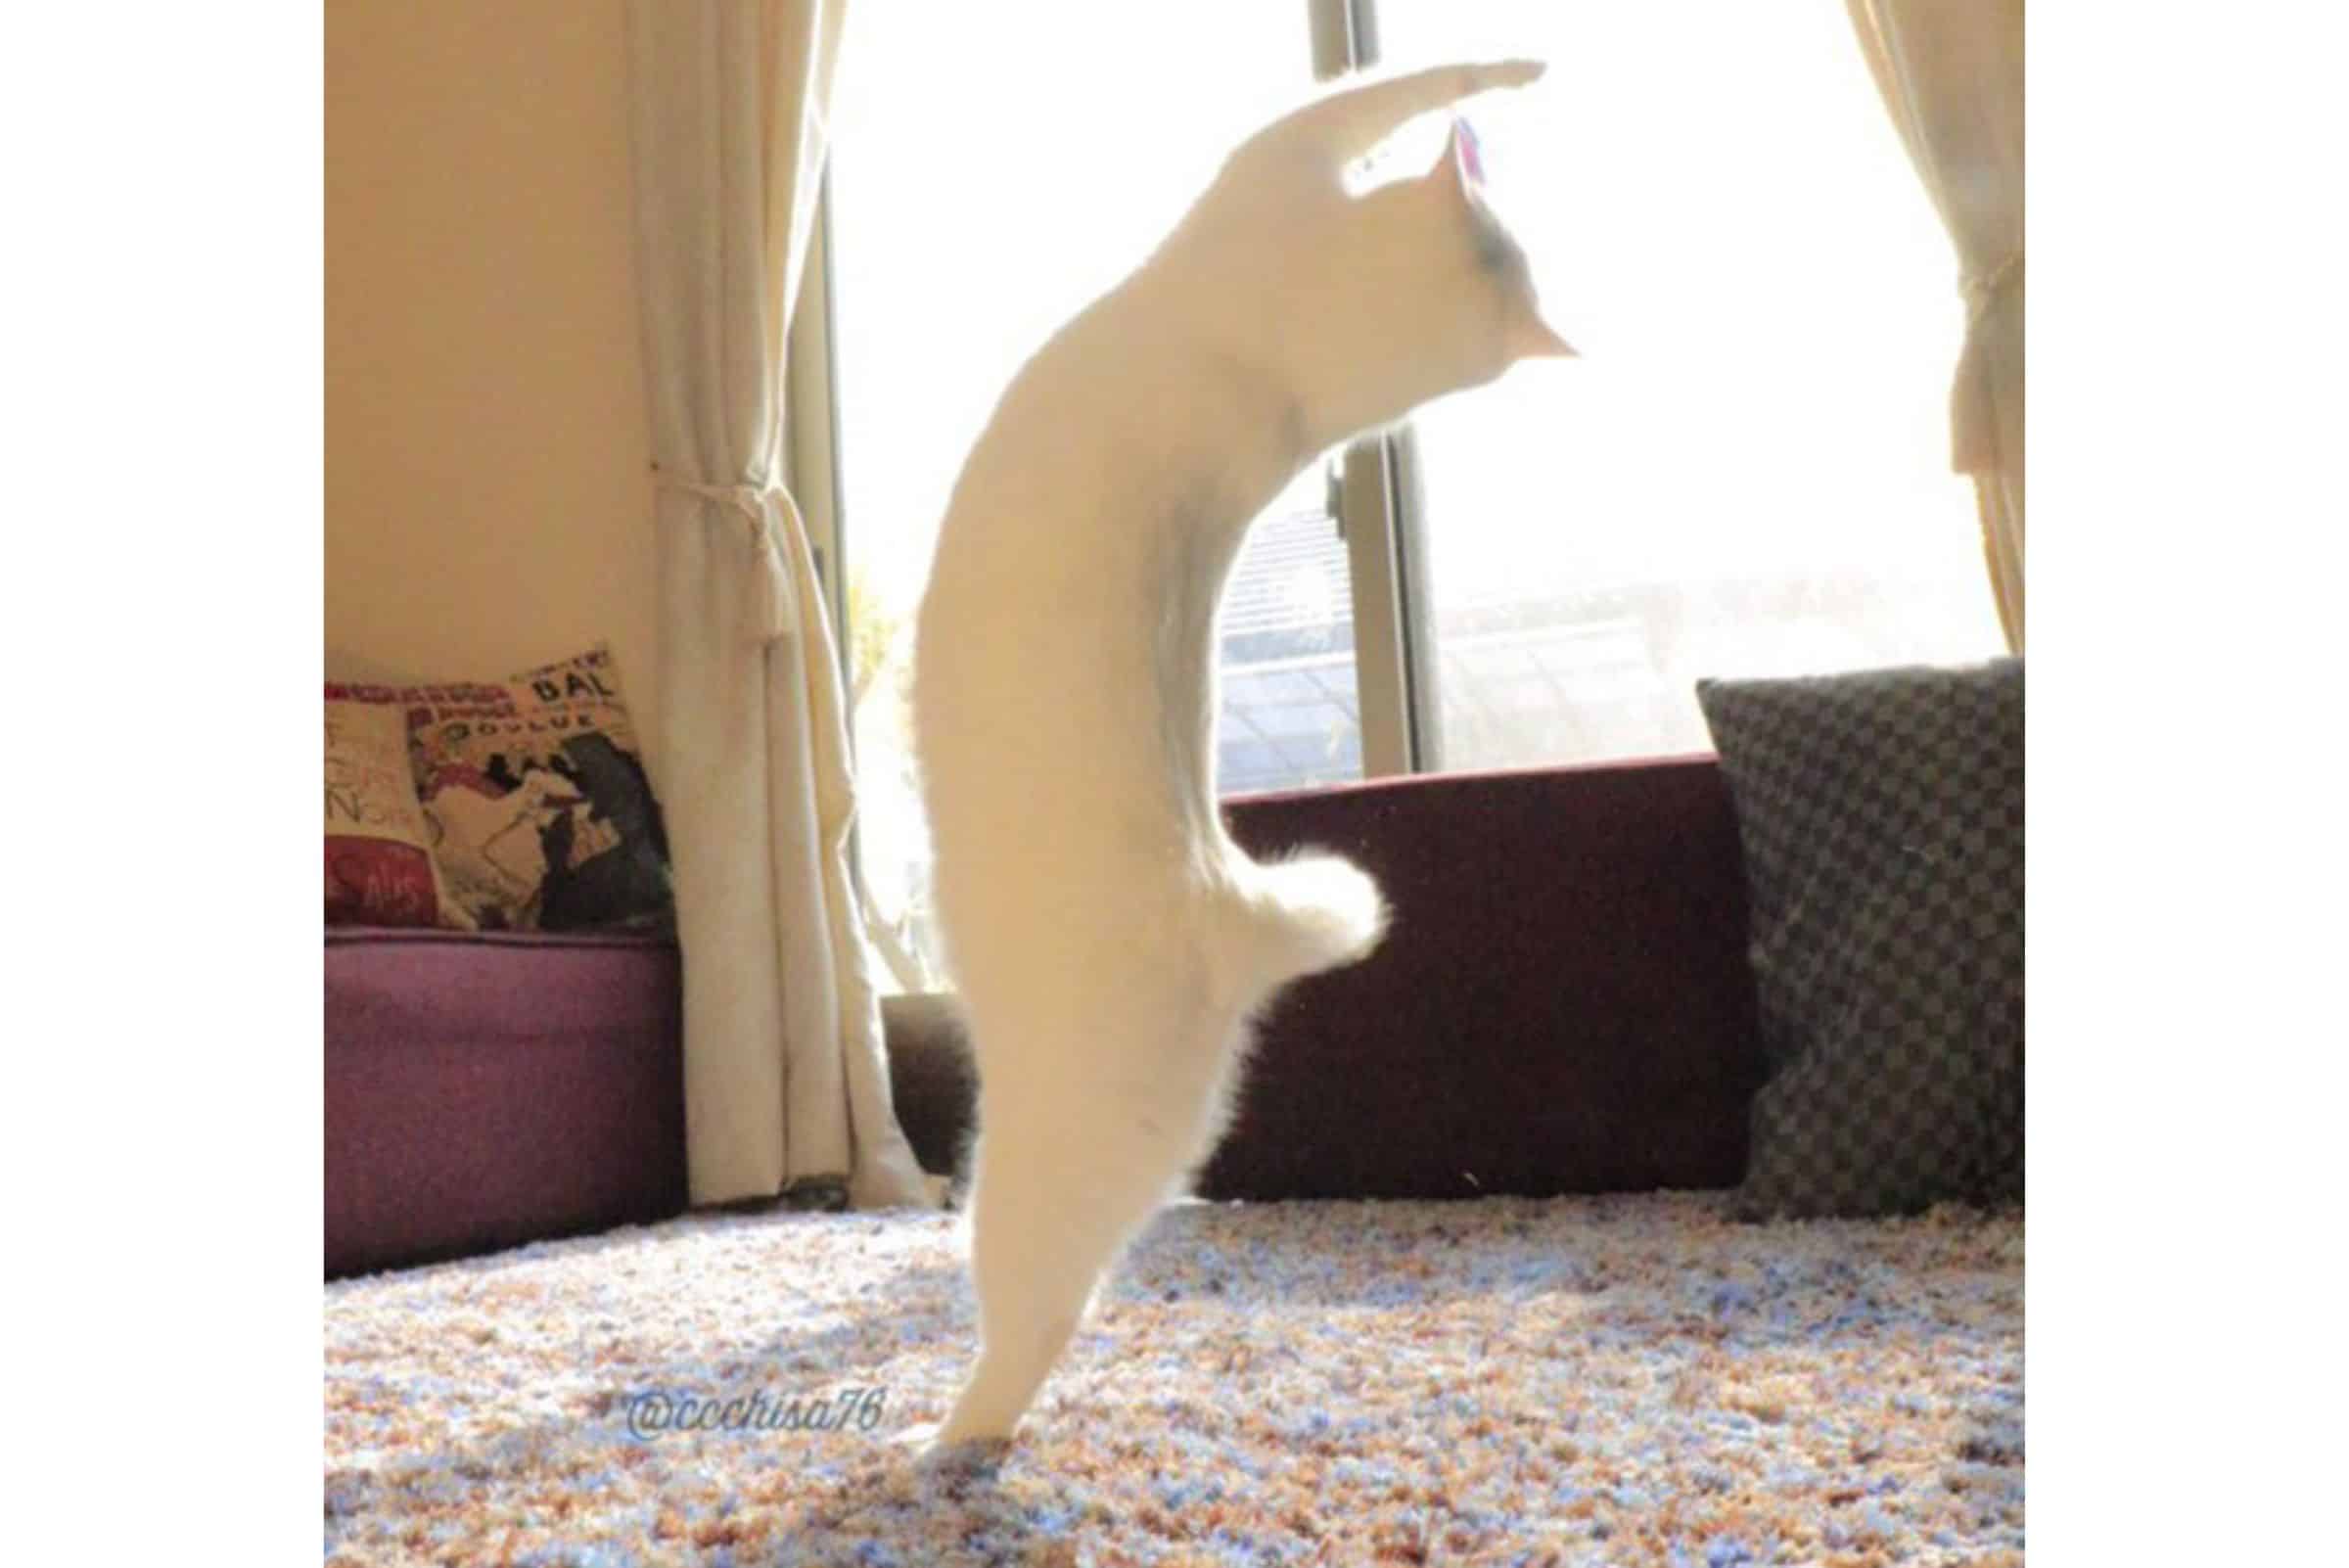 ballet cat on hind legs